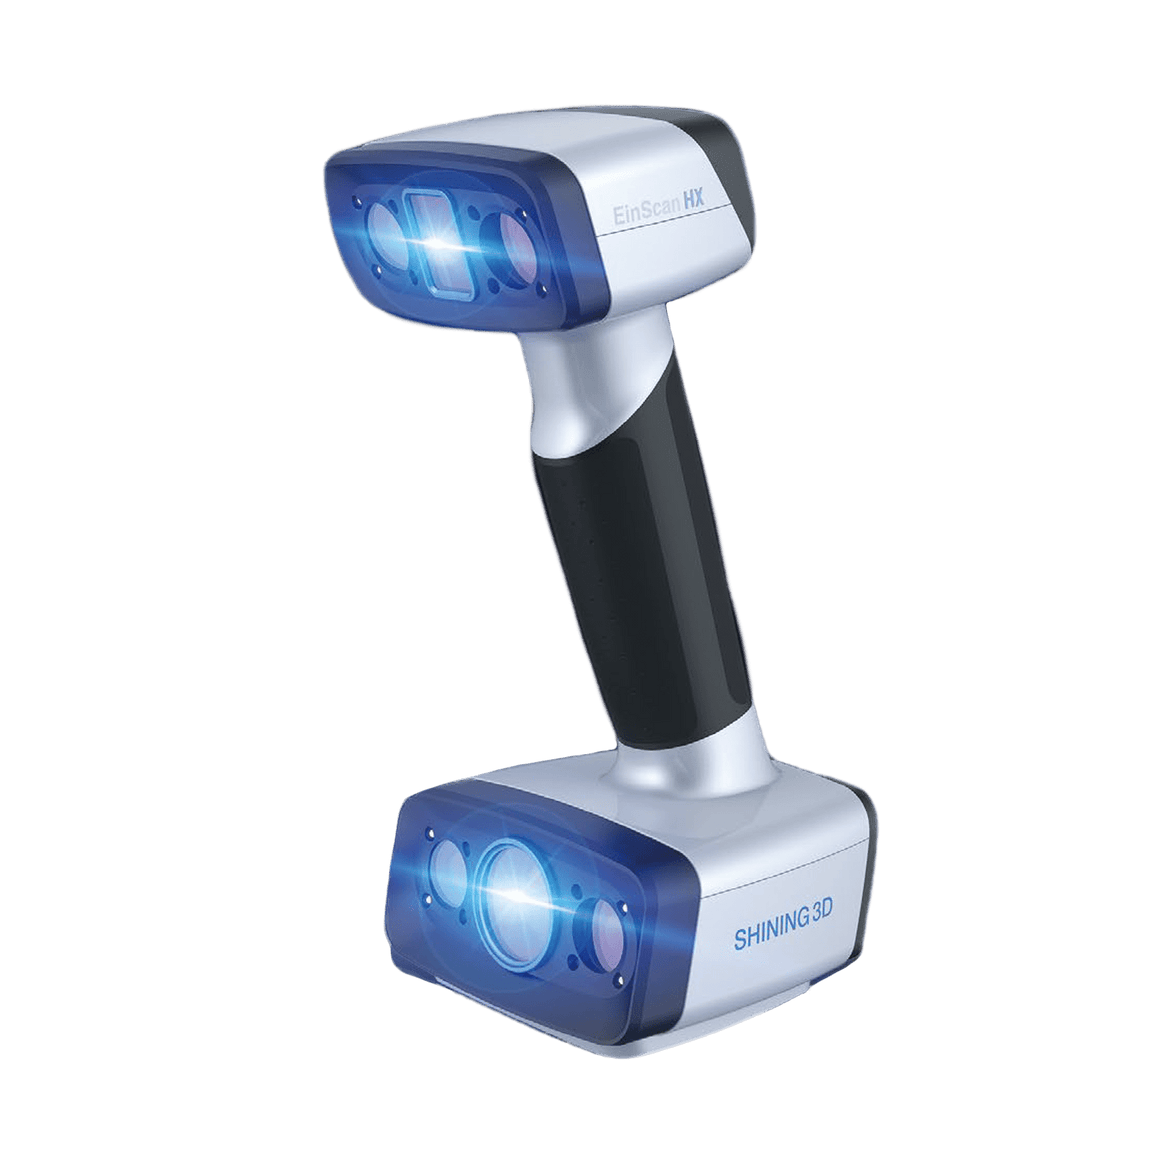 Shining3D - EinScan HX - Hybrid LED and Laser Light 3D Scanner - Shop3D.ca